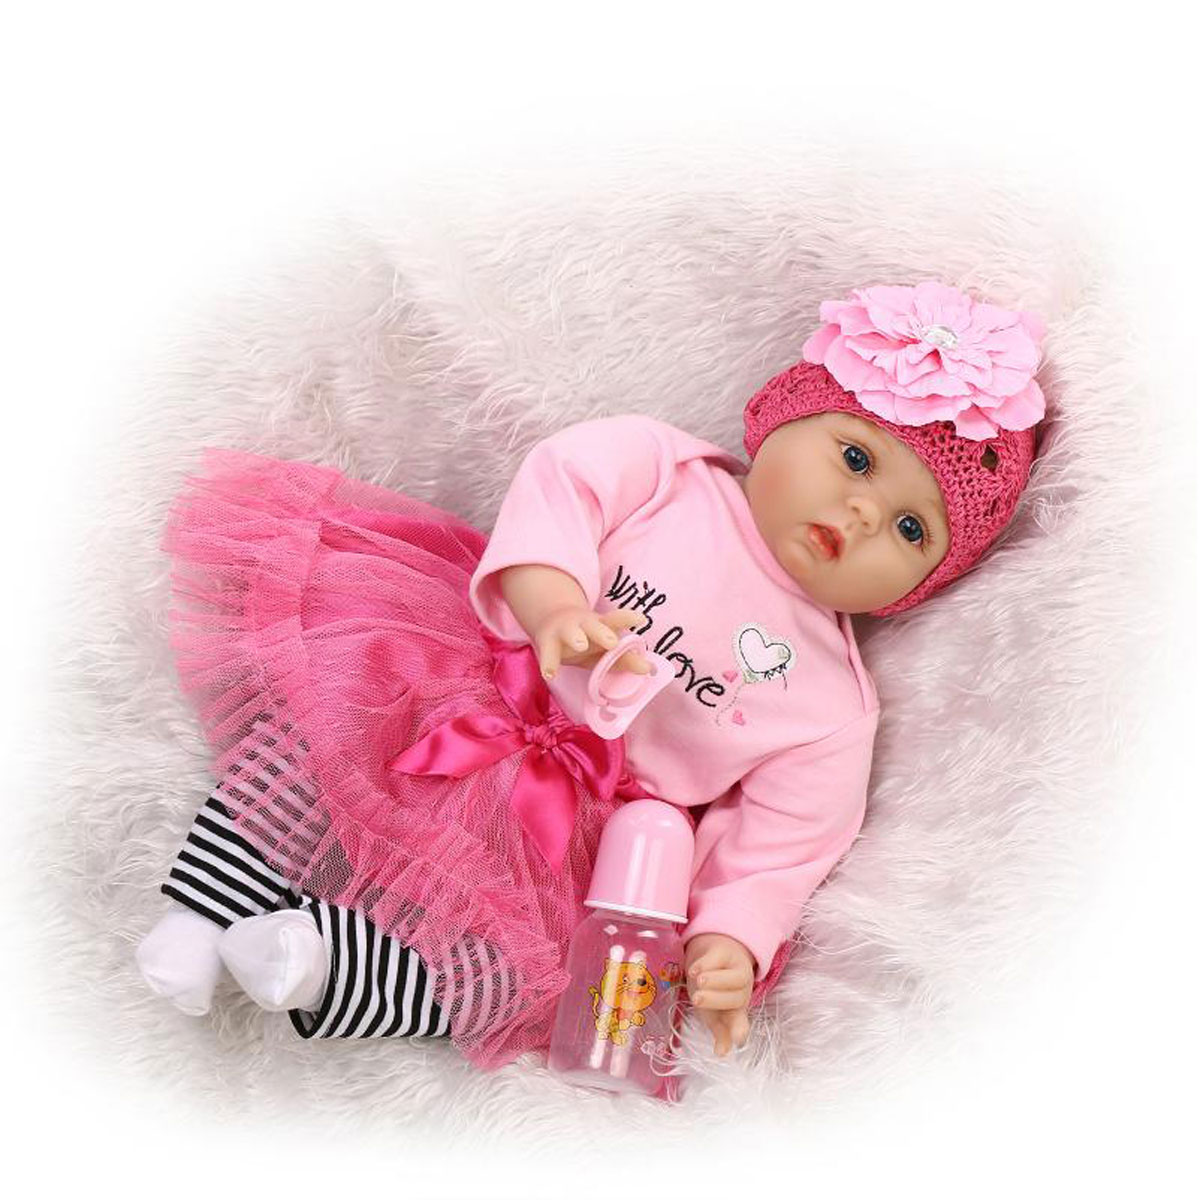 

22"NPK DOLL Realistic Handmade Reborn Baby Girl Doll Toy Lifelike Soft Silicone Viny